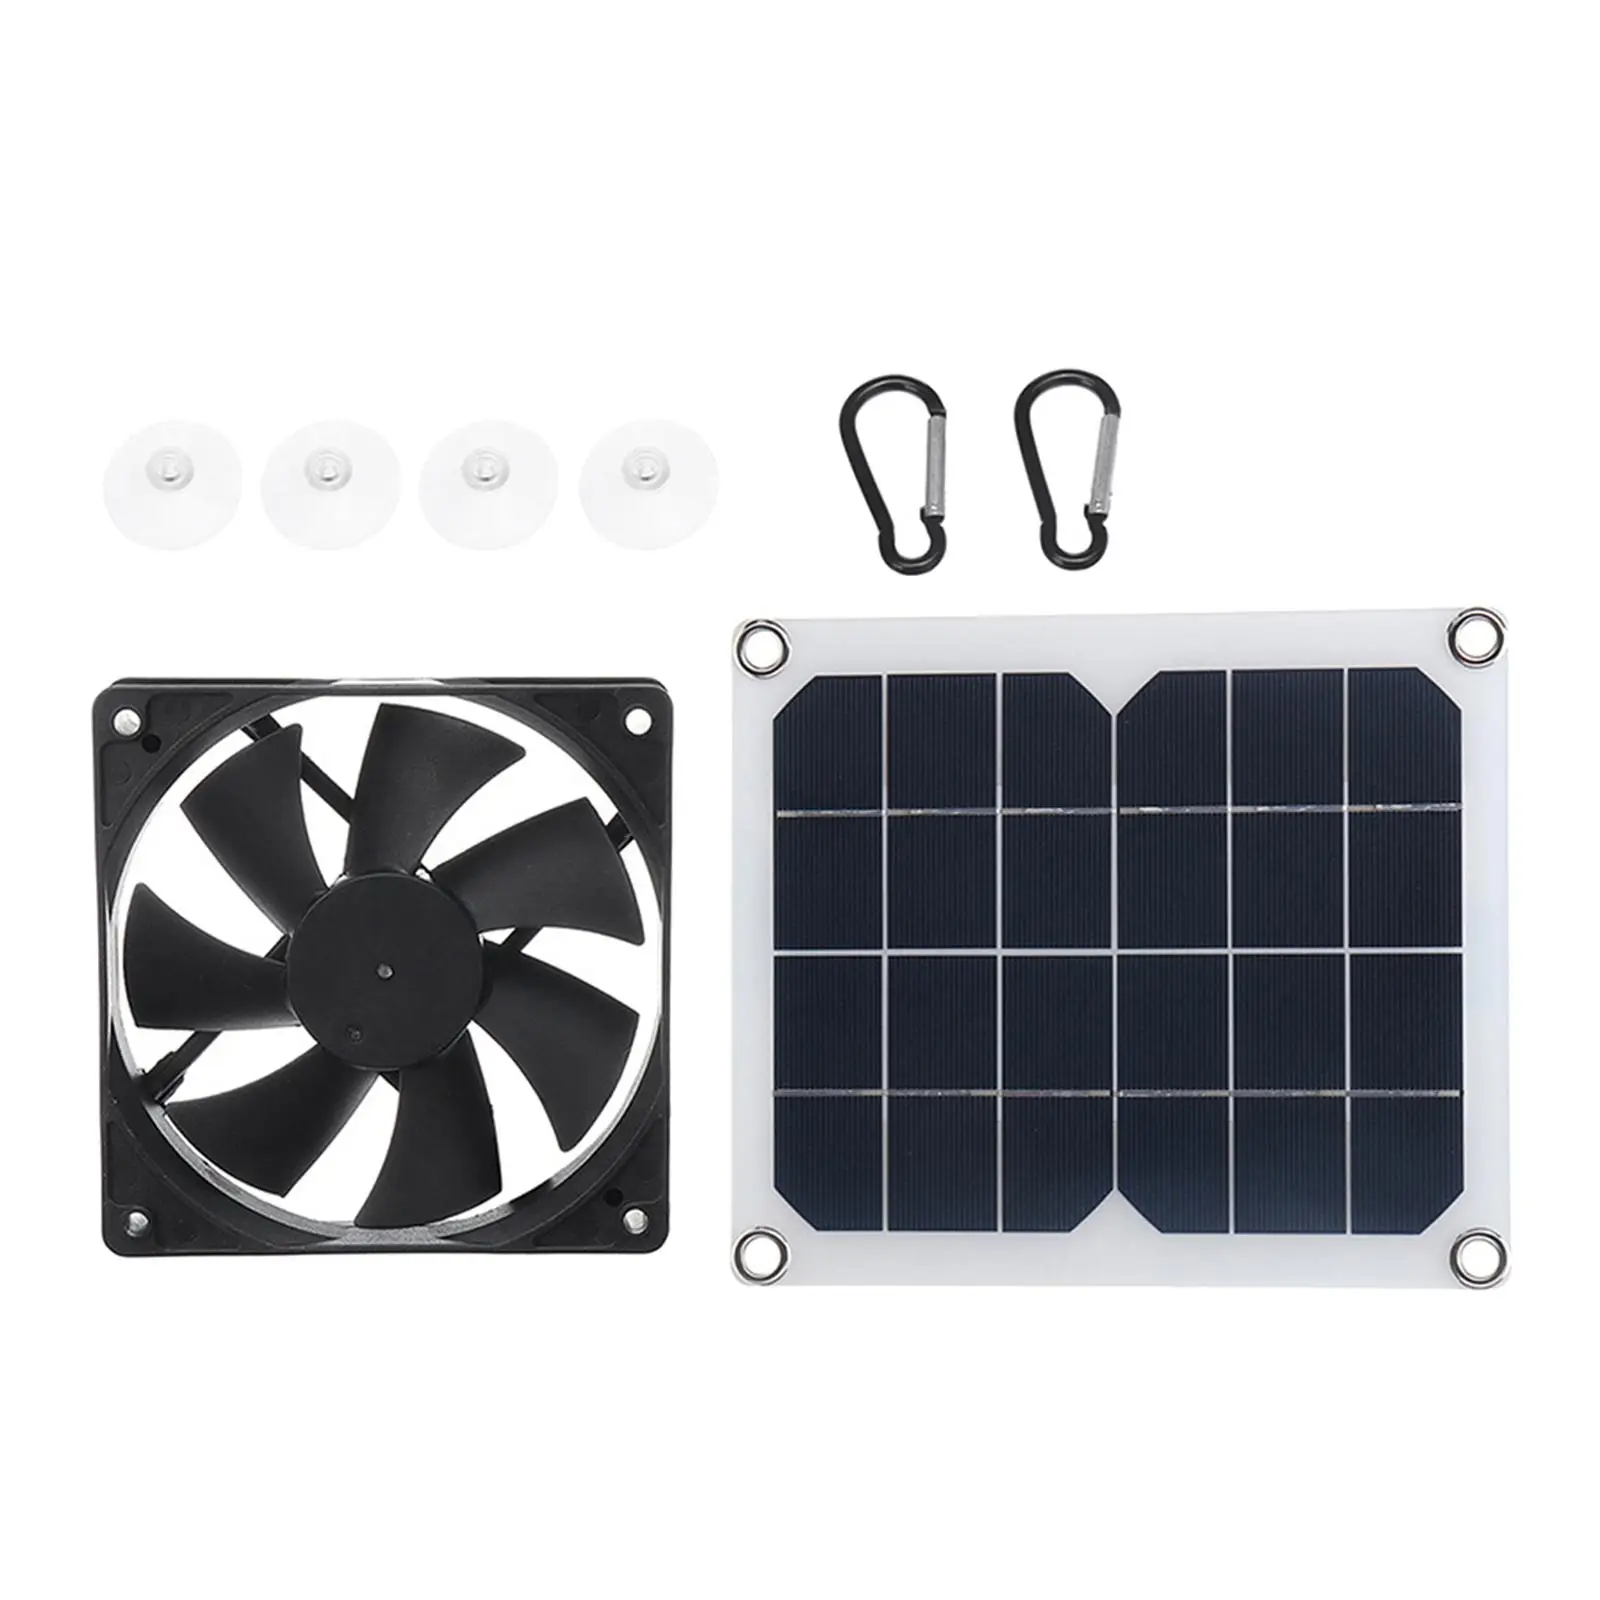 Small Solar Power Panel Exhaust Fan Portable Lightweight 6V for Garage RV